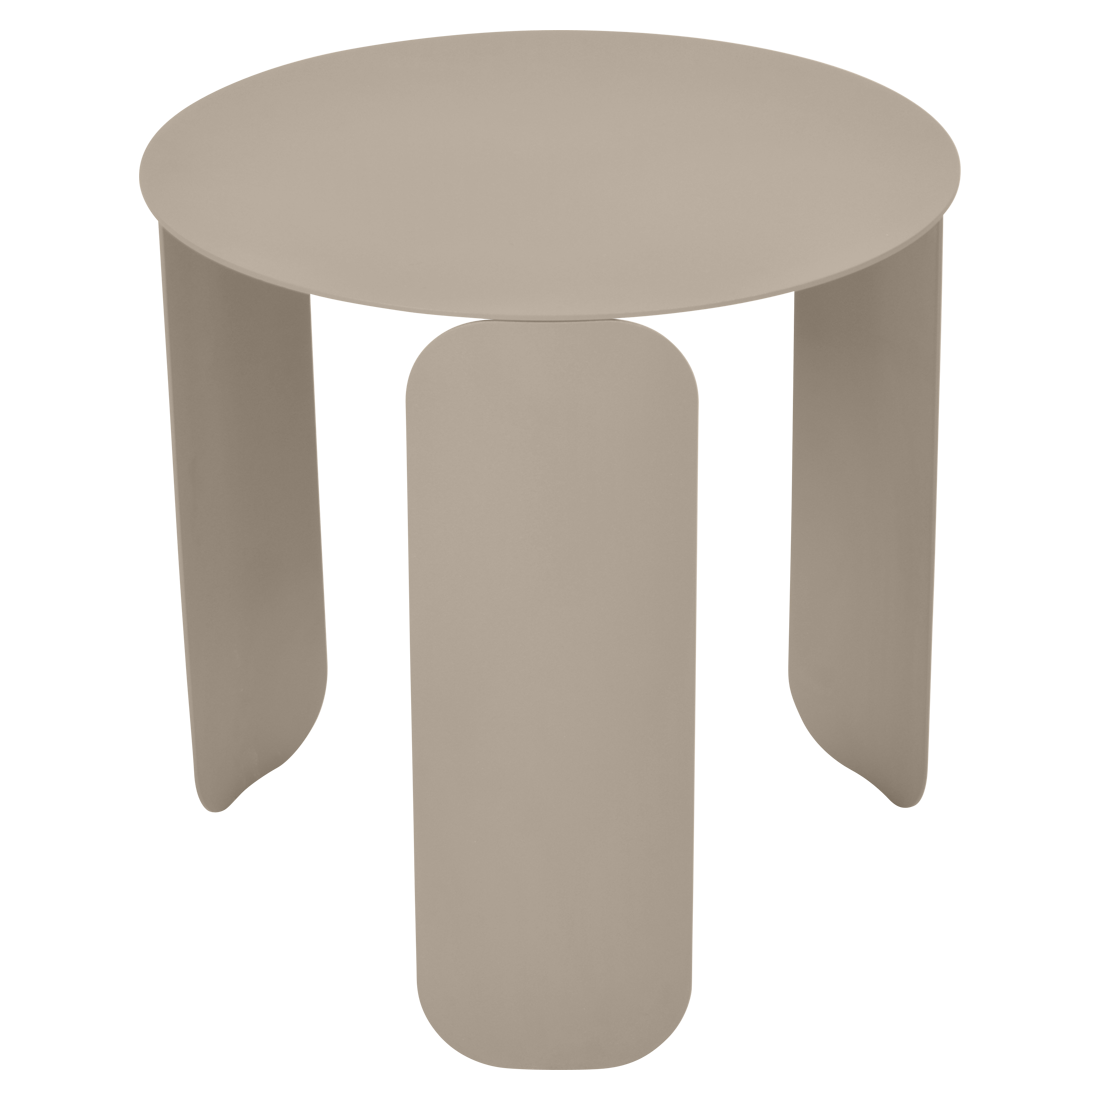 table basse design, table basse metal, table basse fermob, table basse beige